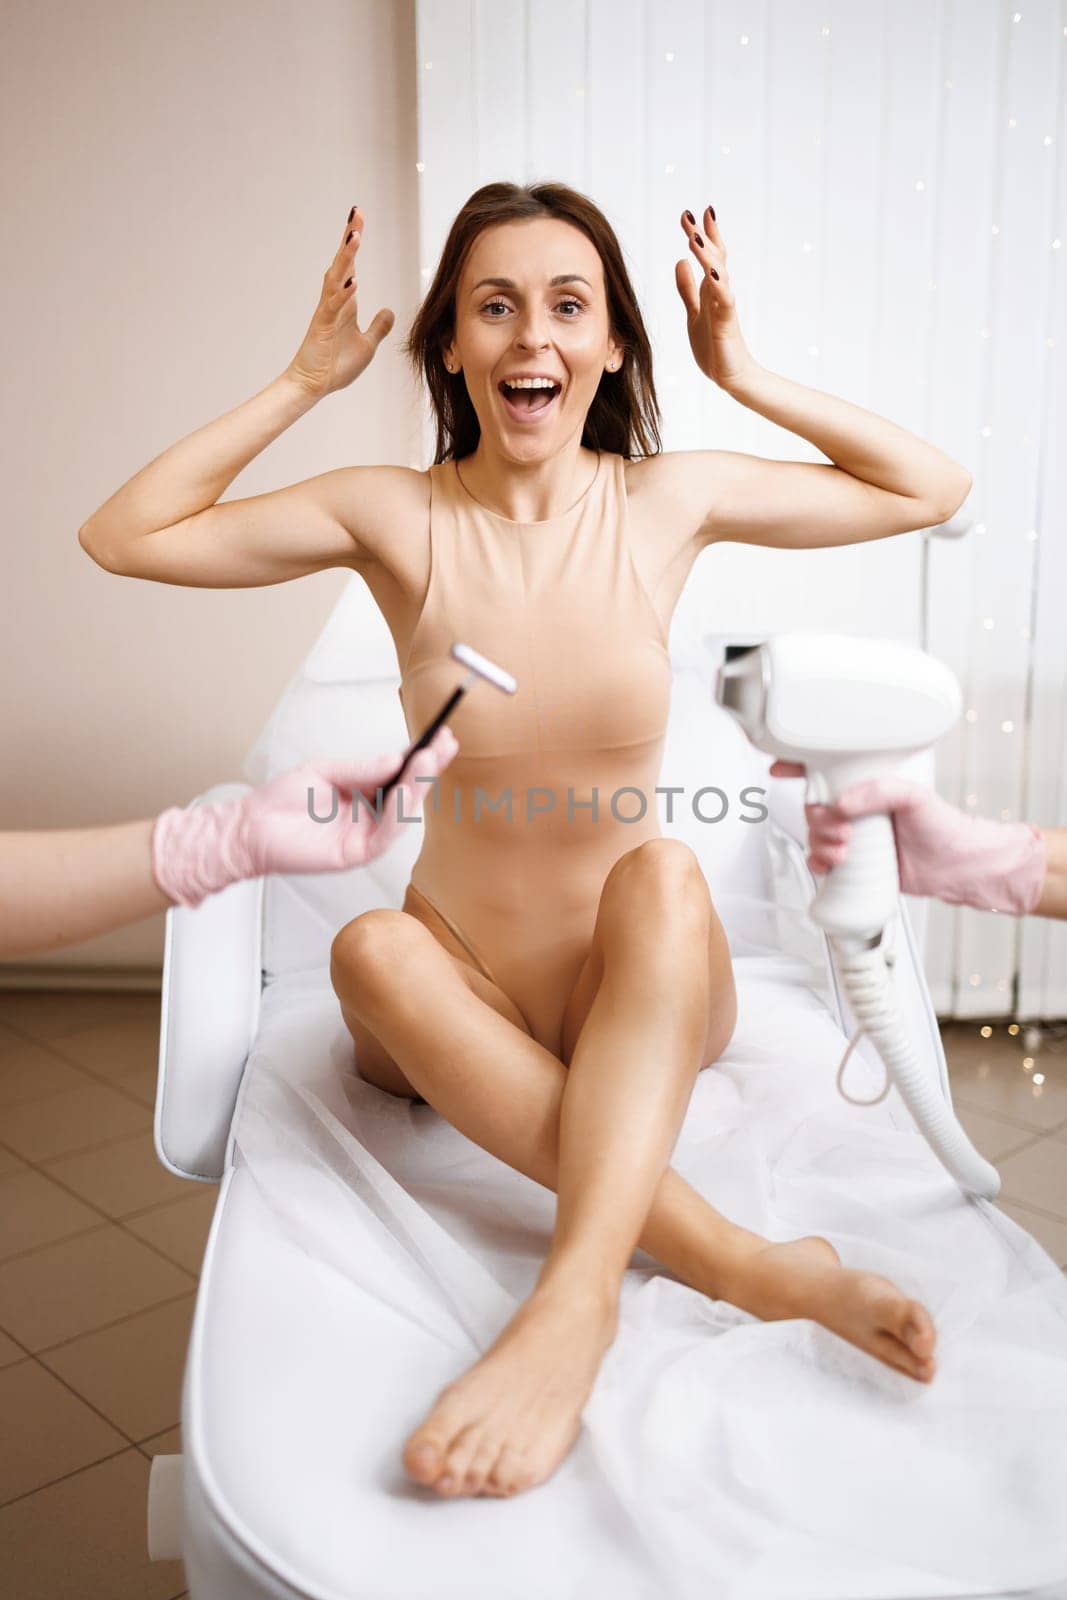 Laser epilator vs shaving razor. Cosmetologist holds in hand equipment for laser hair removal and razors in the other hand over brunette woman. Laser hair removal.